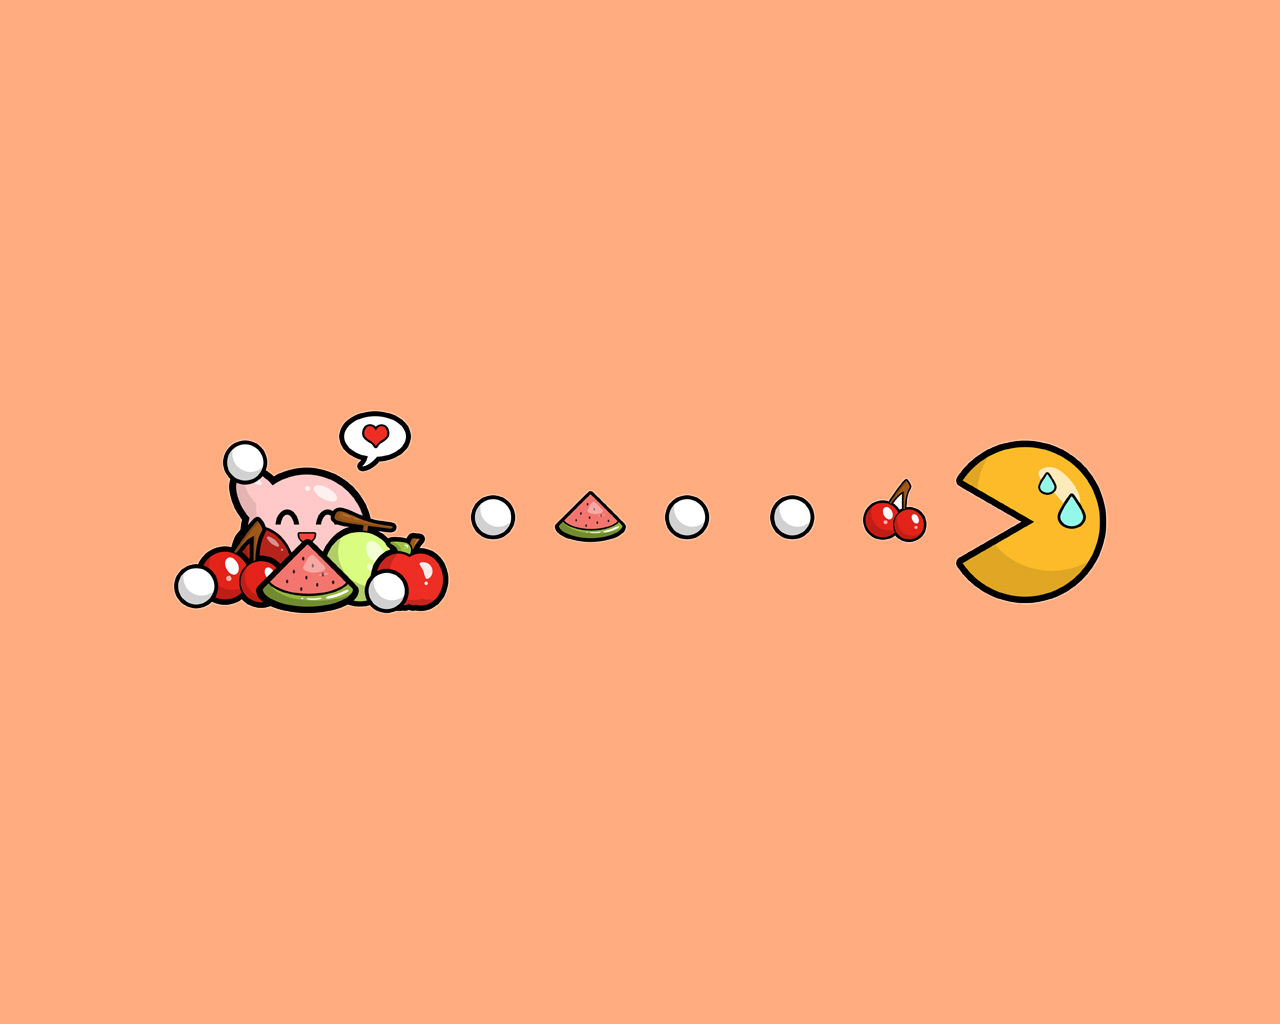 Kirby Games Image Galleries